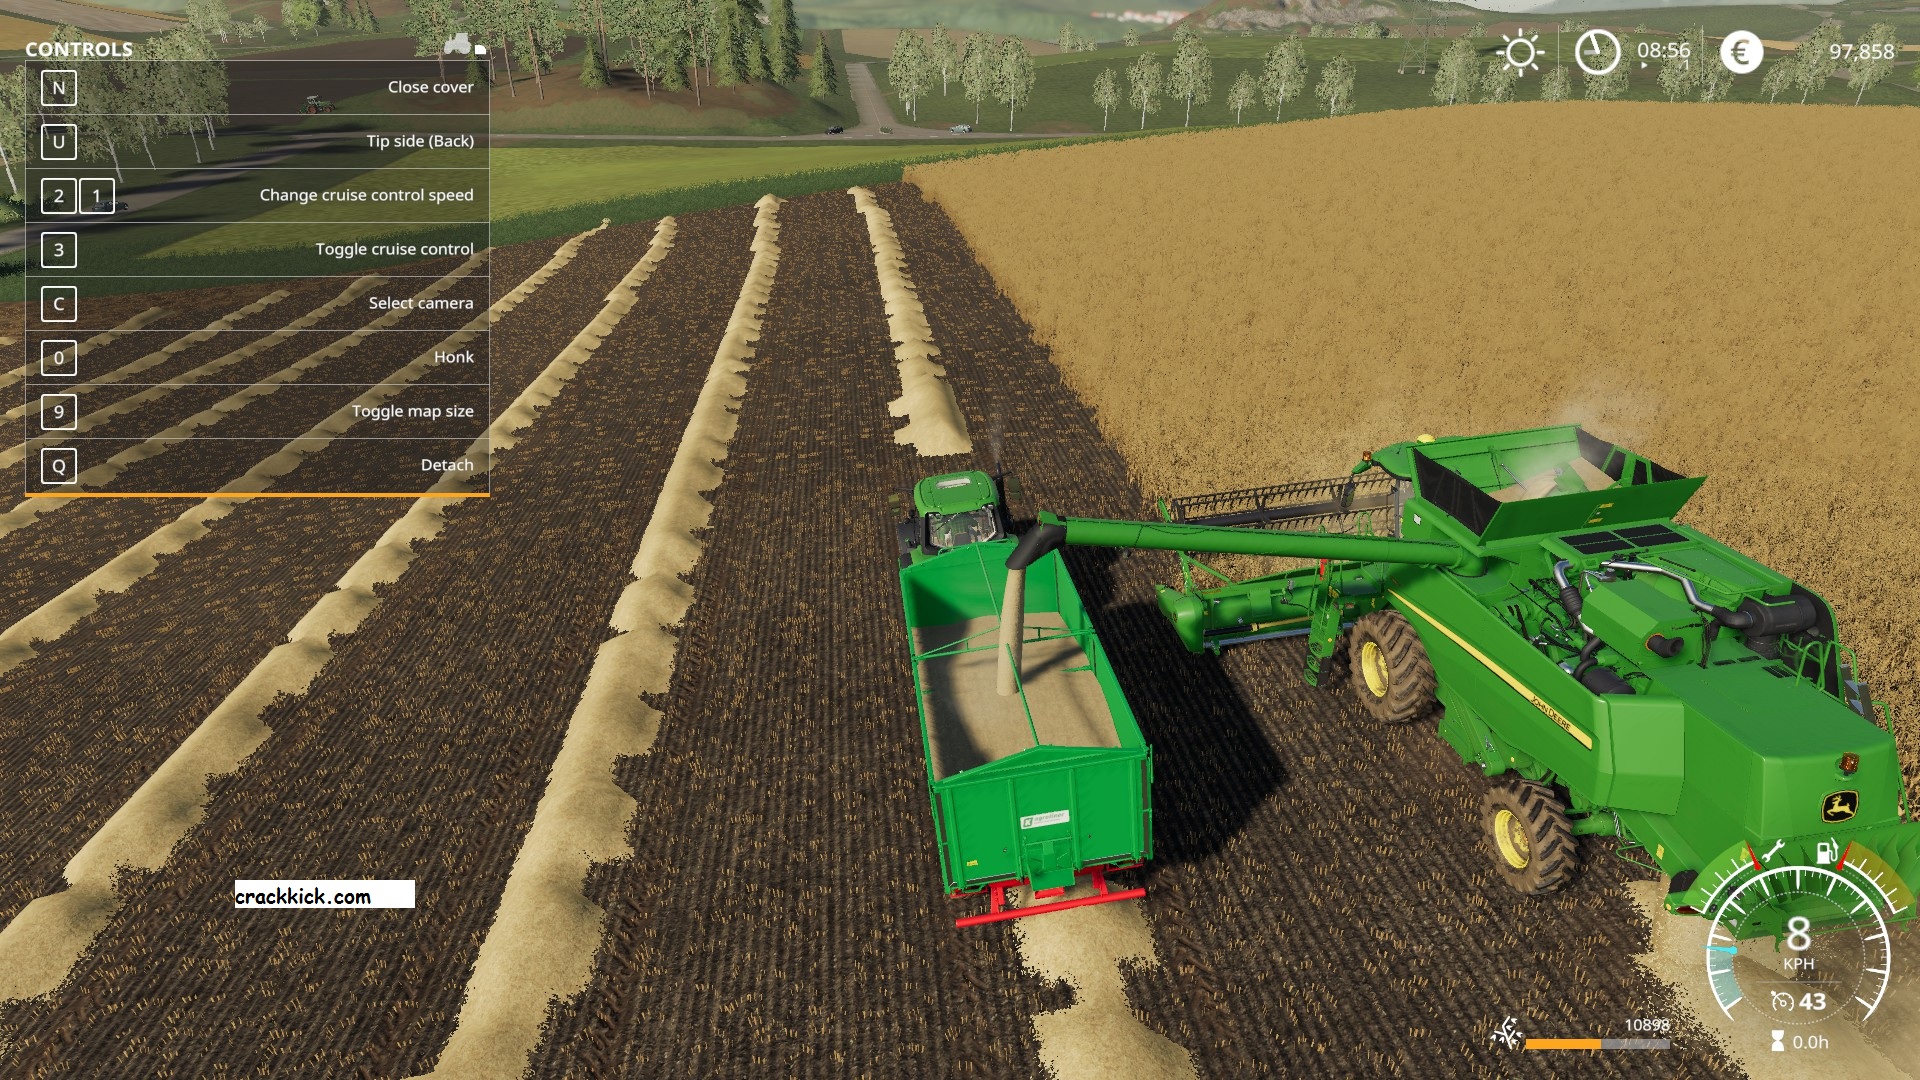 Farming Simulator 22v1.7.1.0 Crack With Torrent Free Download [Win/Mac]